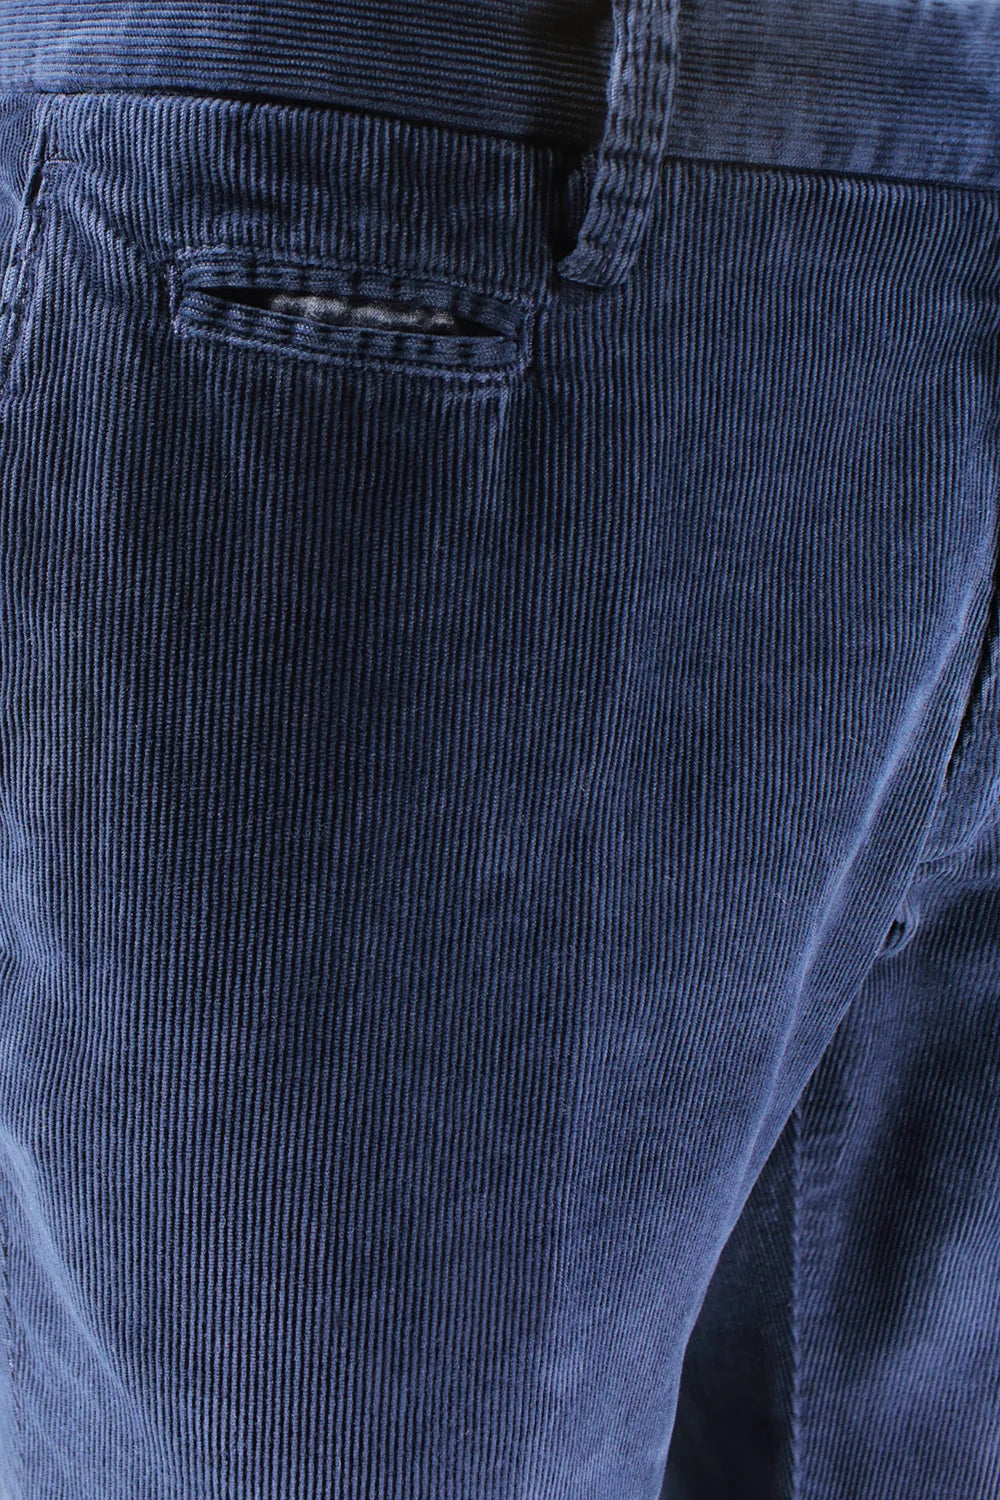 Pantalone in velluto millerighe blu taschino